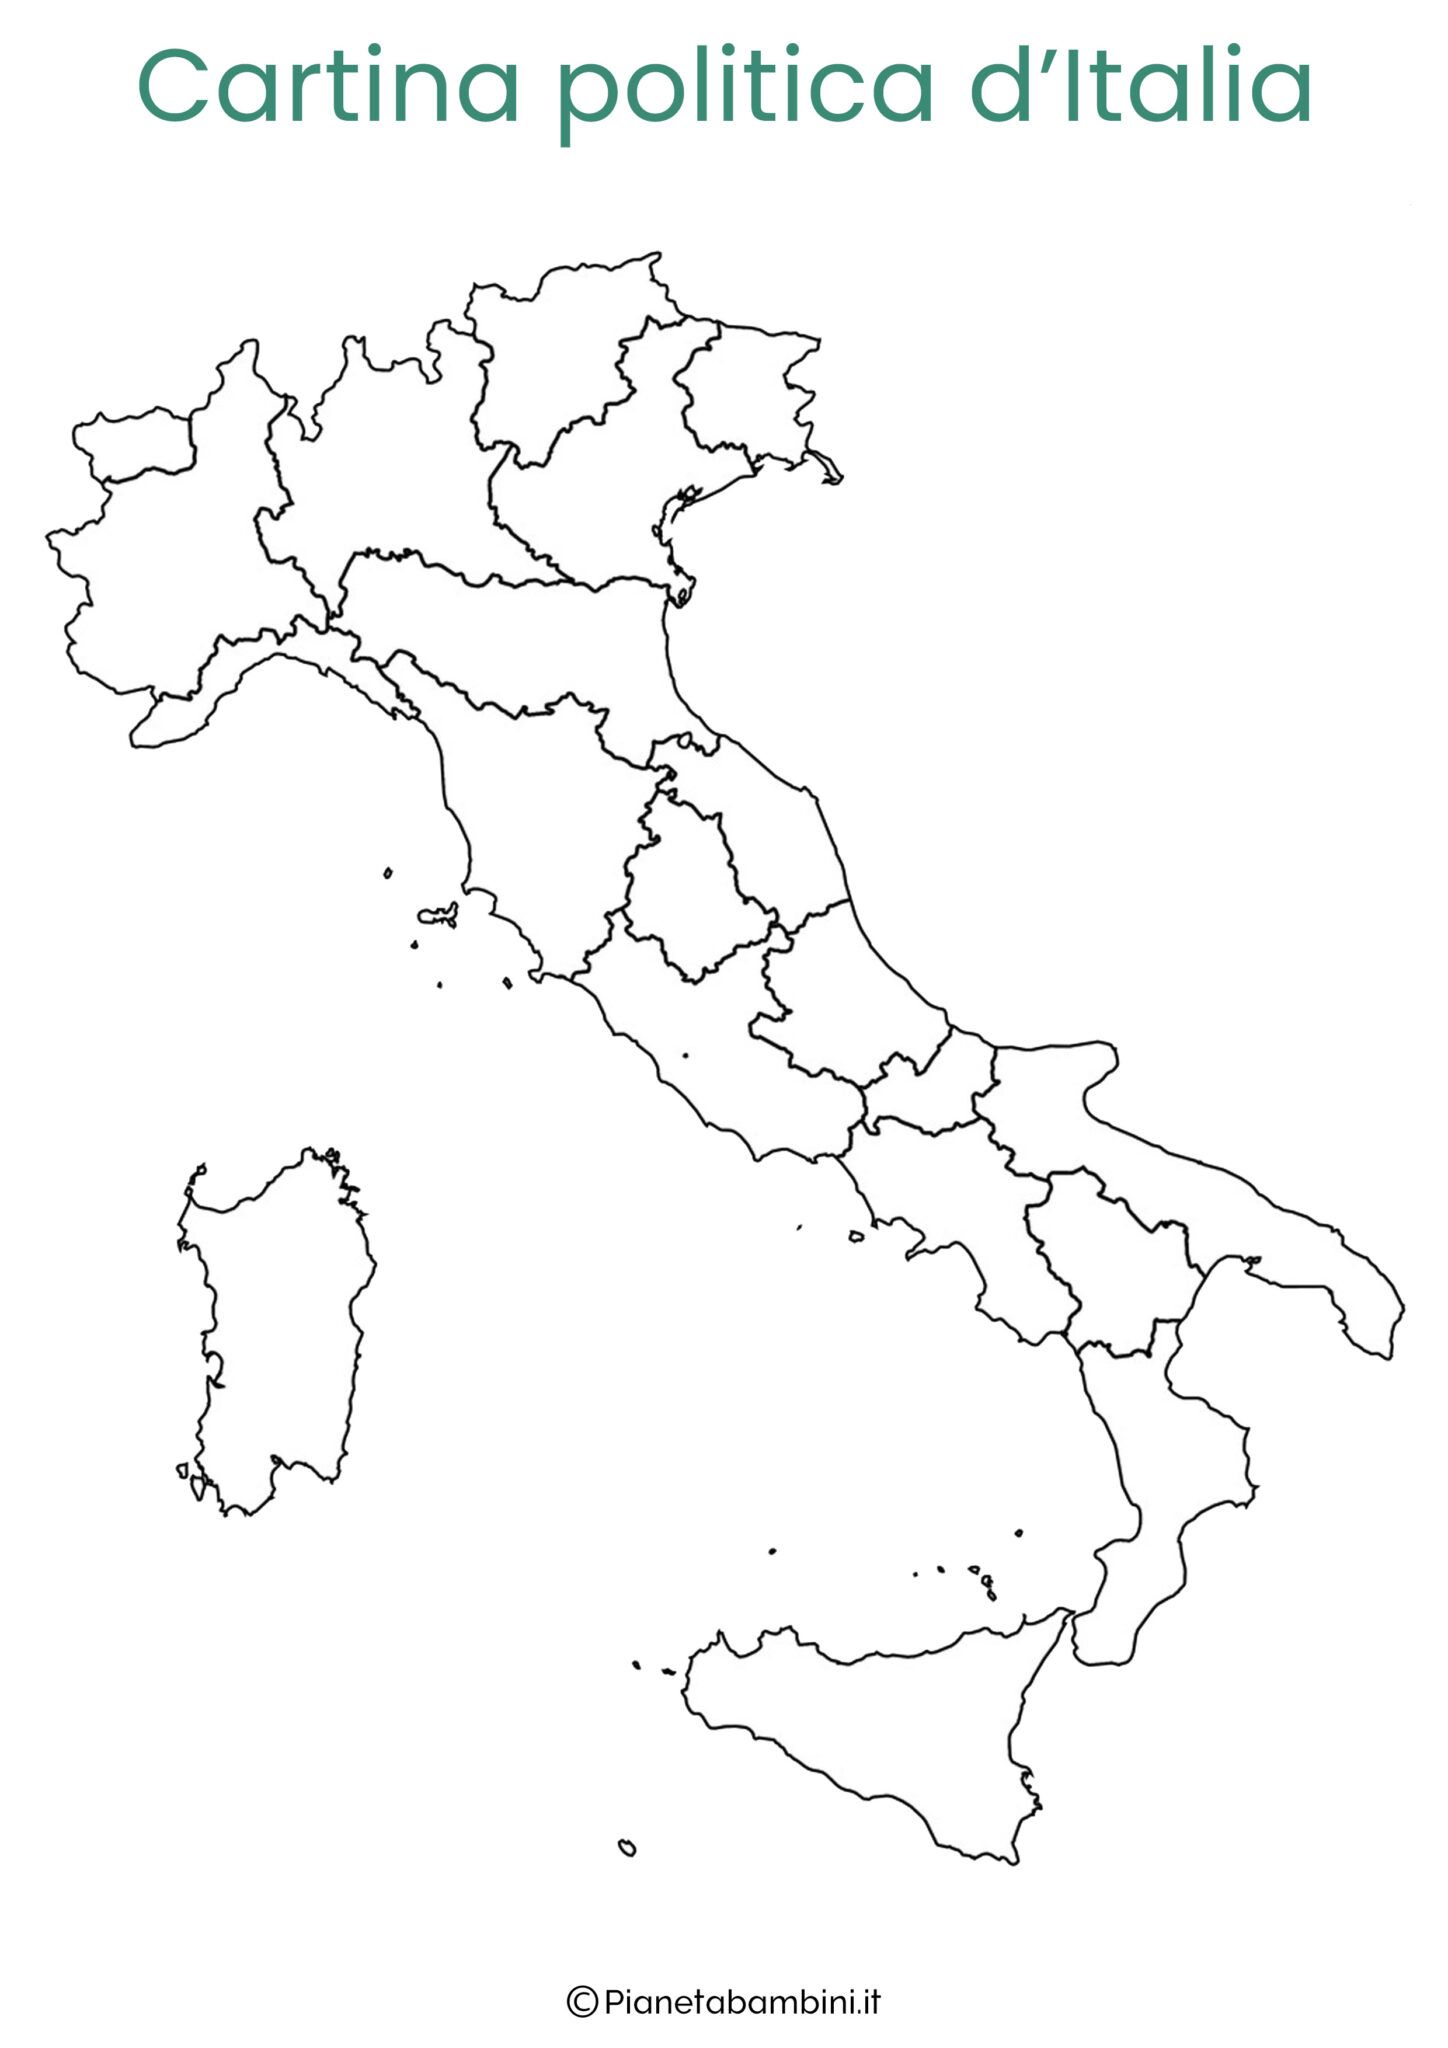 cartina geografia italia politica pdf to jpg